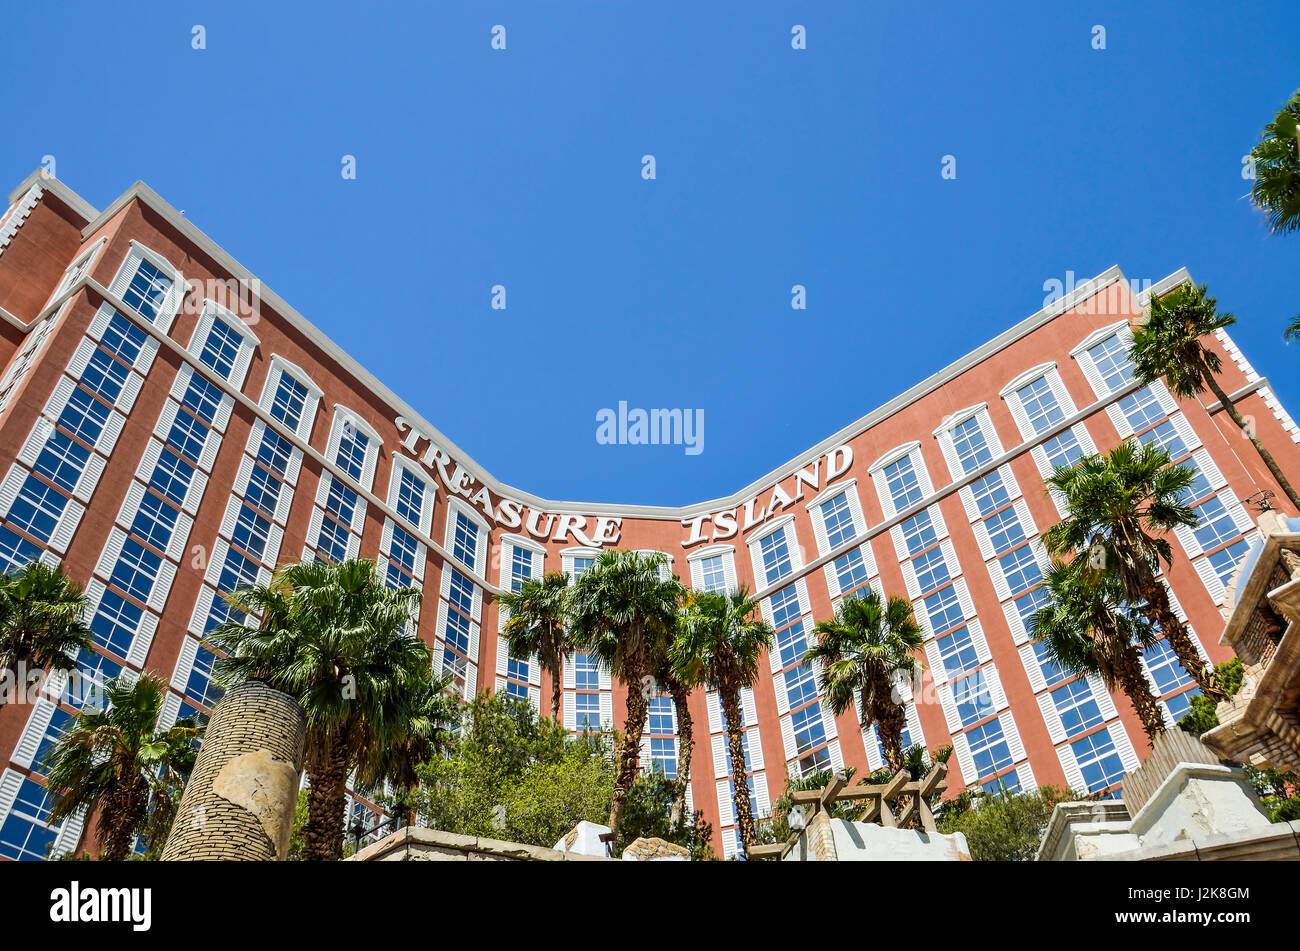 Las Vegas, USA - May 7, 2014: Treasure Island hotel and casino exterior with sign Stock Photo